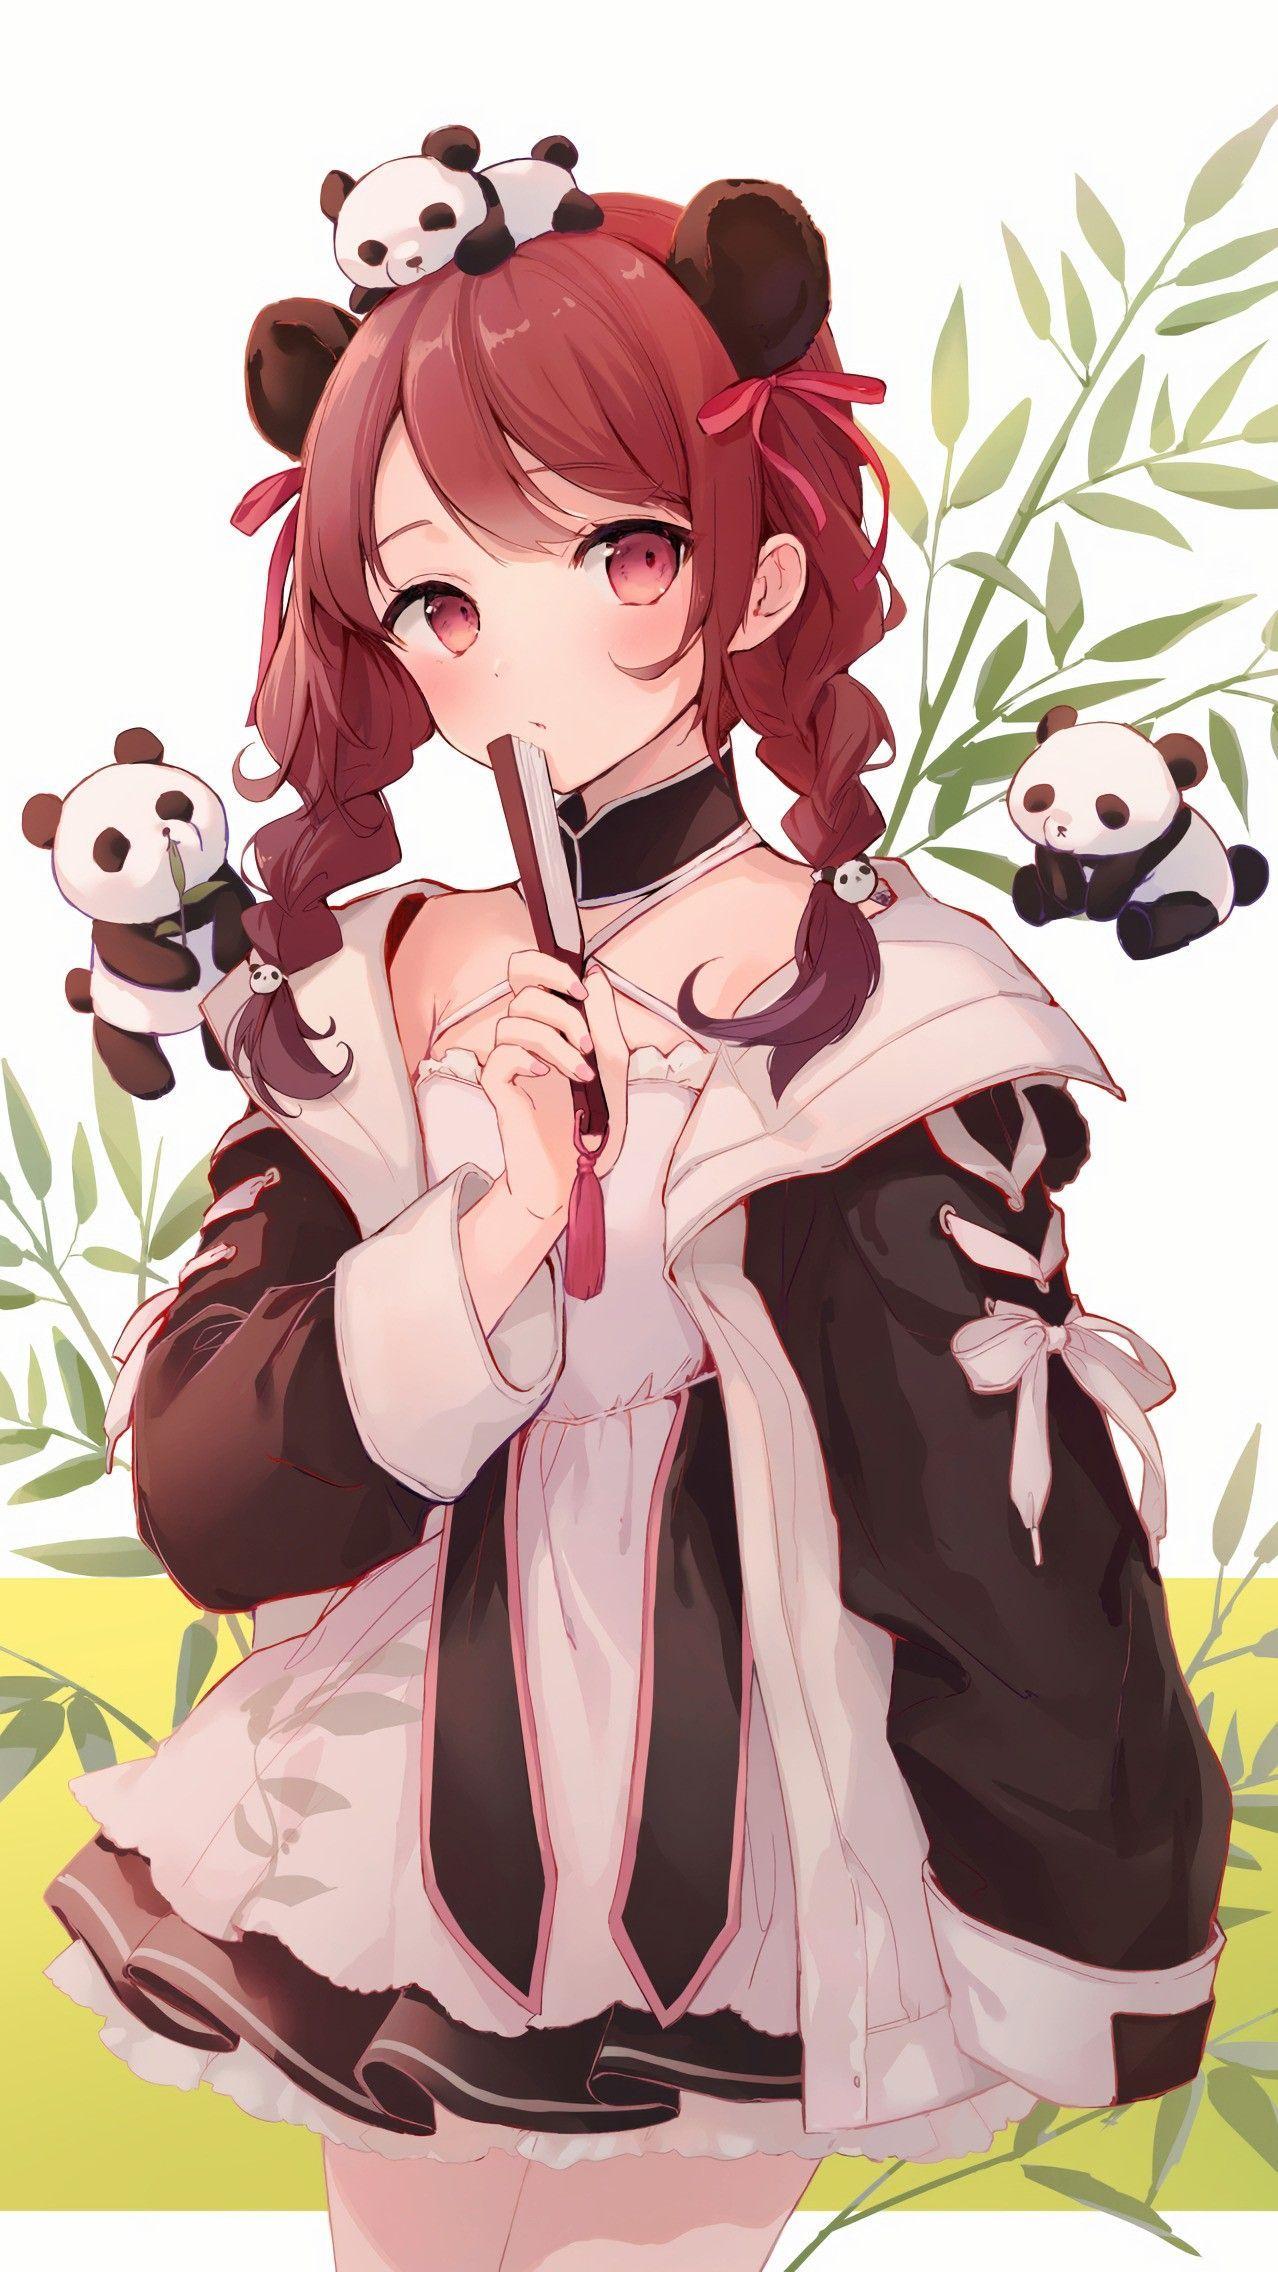 Panda Anime Girl Wallpapers Top Free Panda Anime Girl Backgrounds